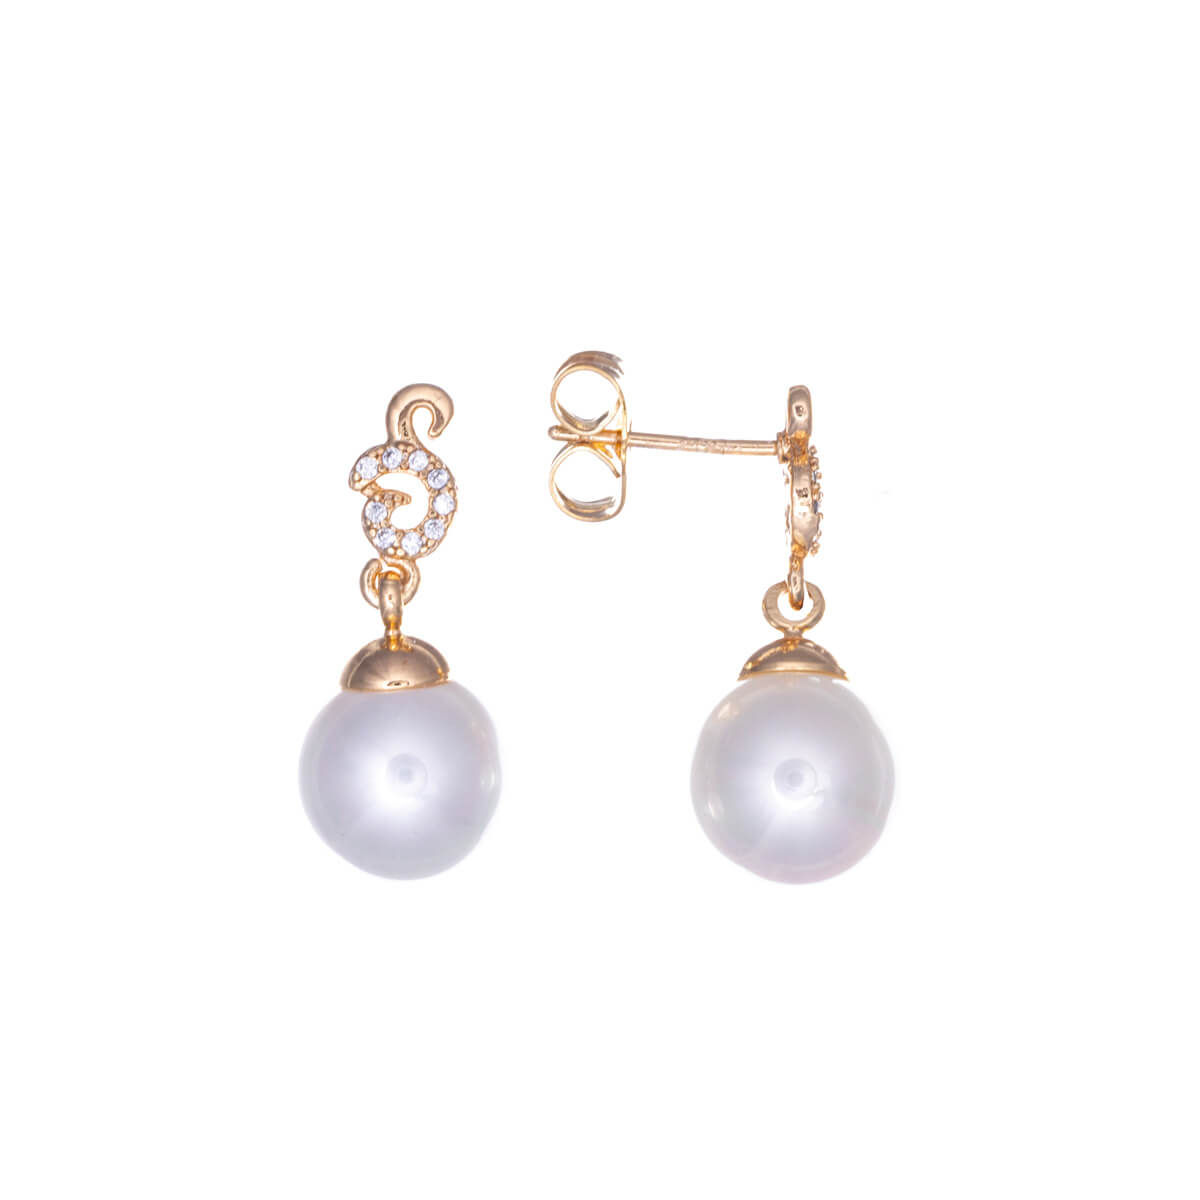 Hanging pearl earrings with zirconia stones